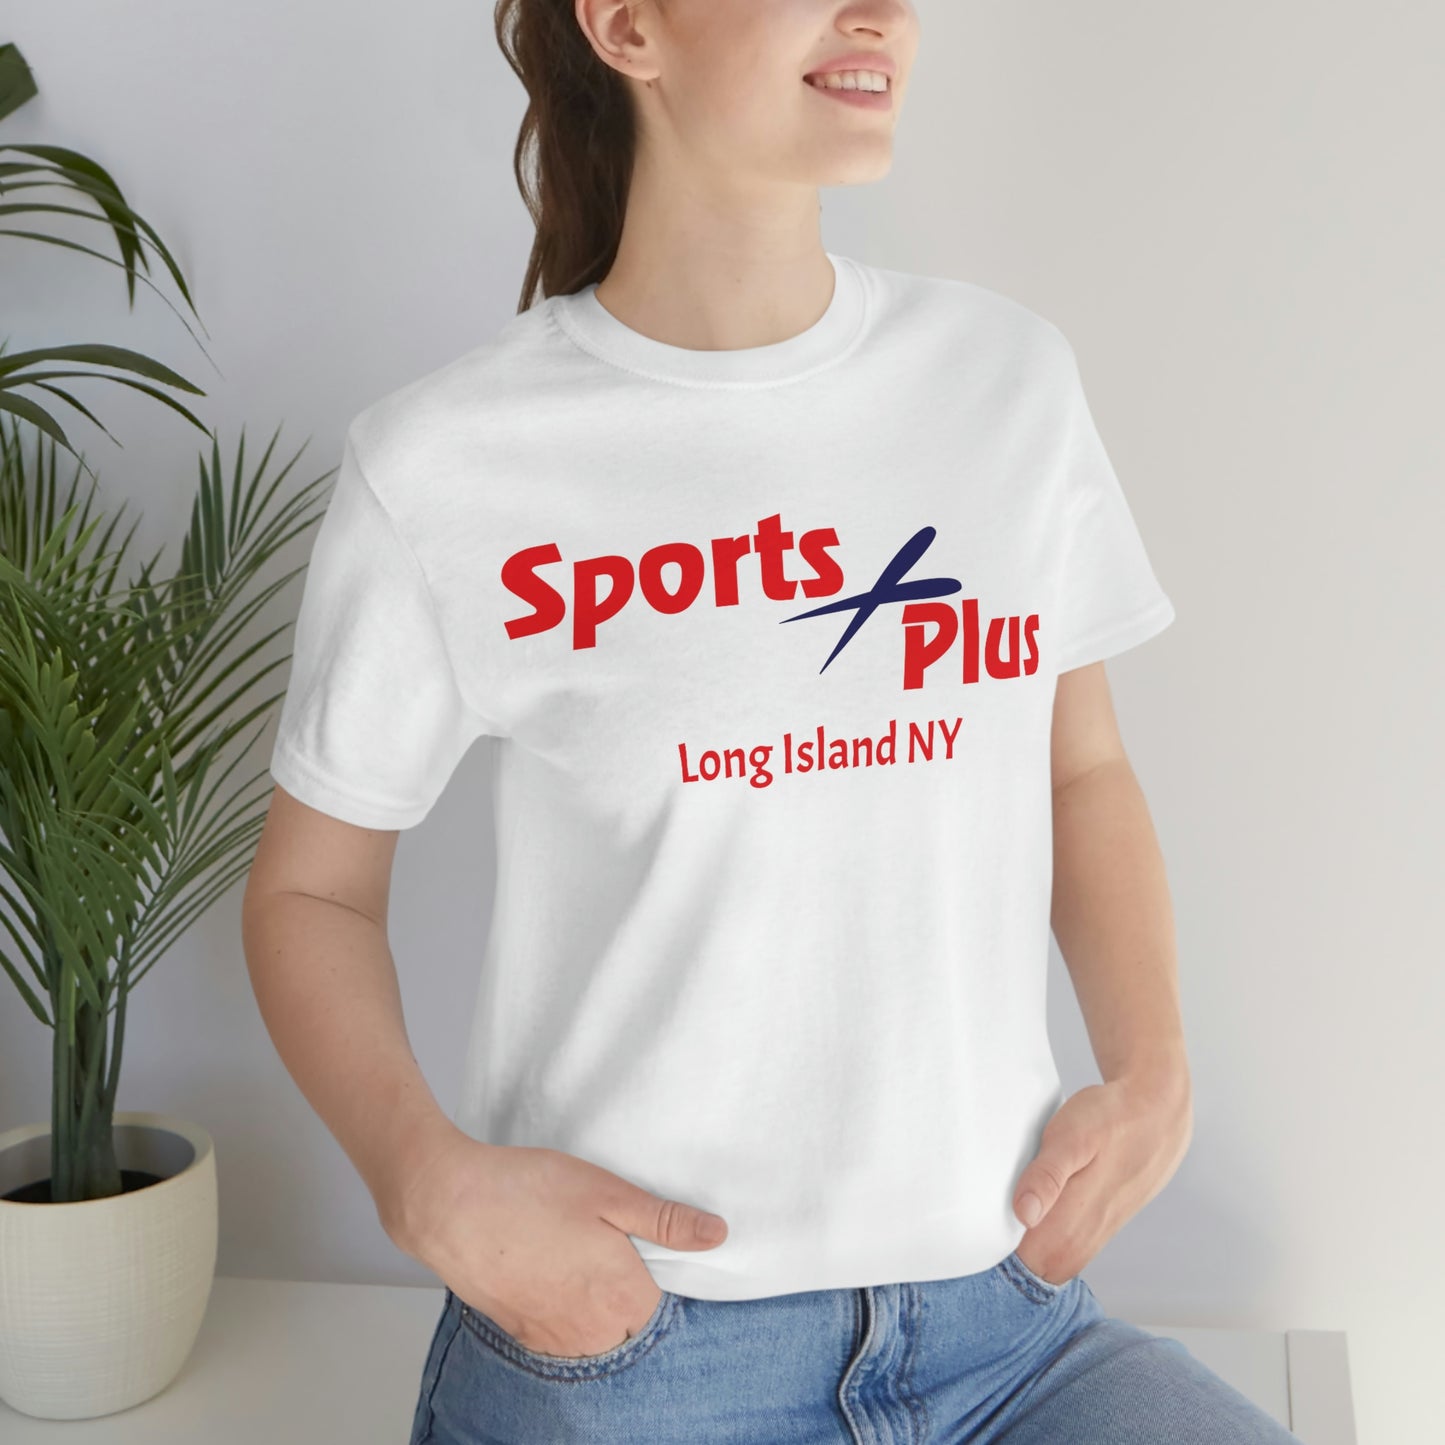 Sports Plus Mall Arcade Long Island NY Retro 90's Hangout T-Shirt Gaming